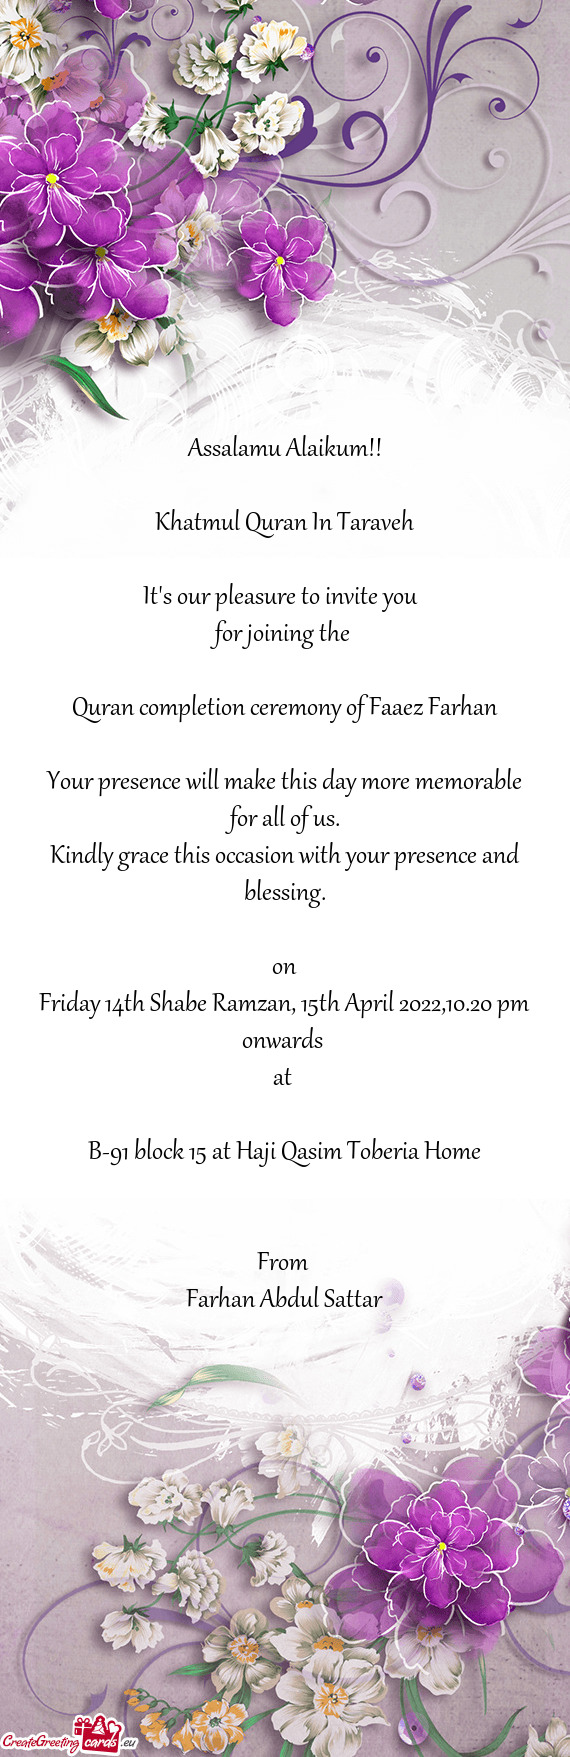 Quran completion ceremony of Faaez Farhan